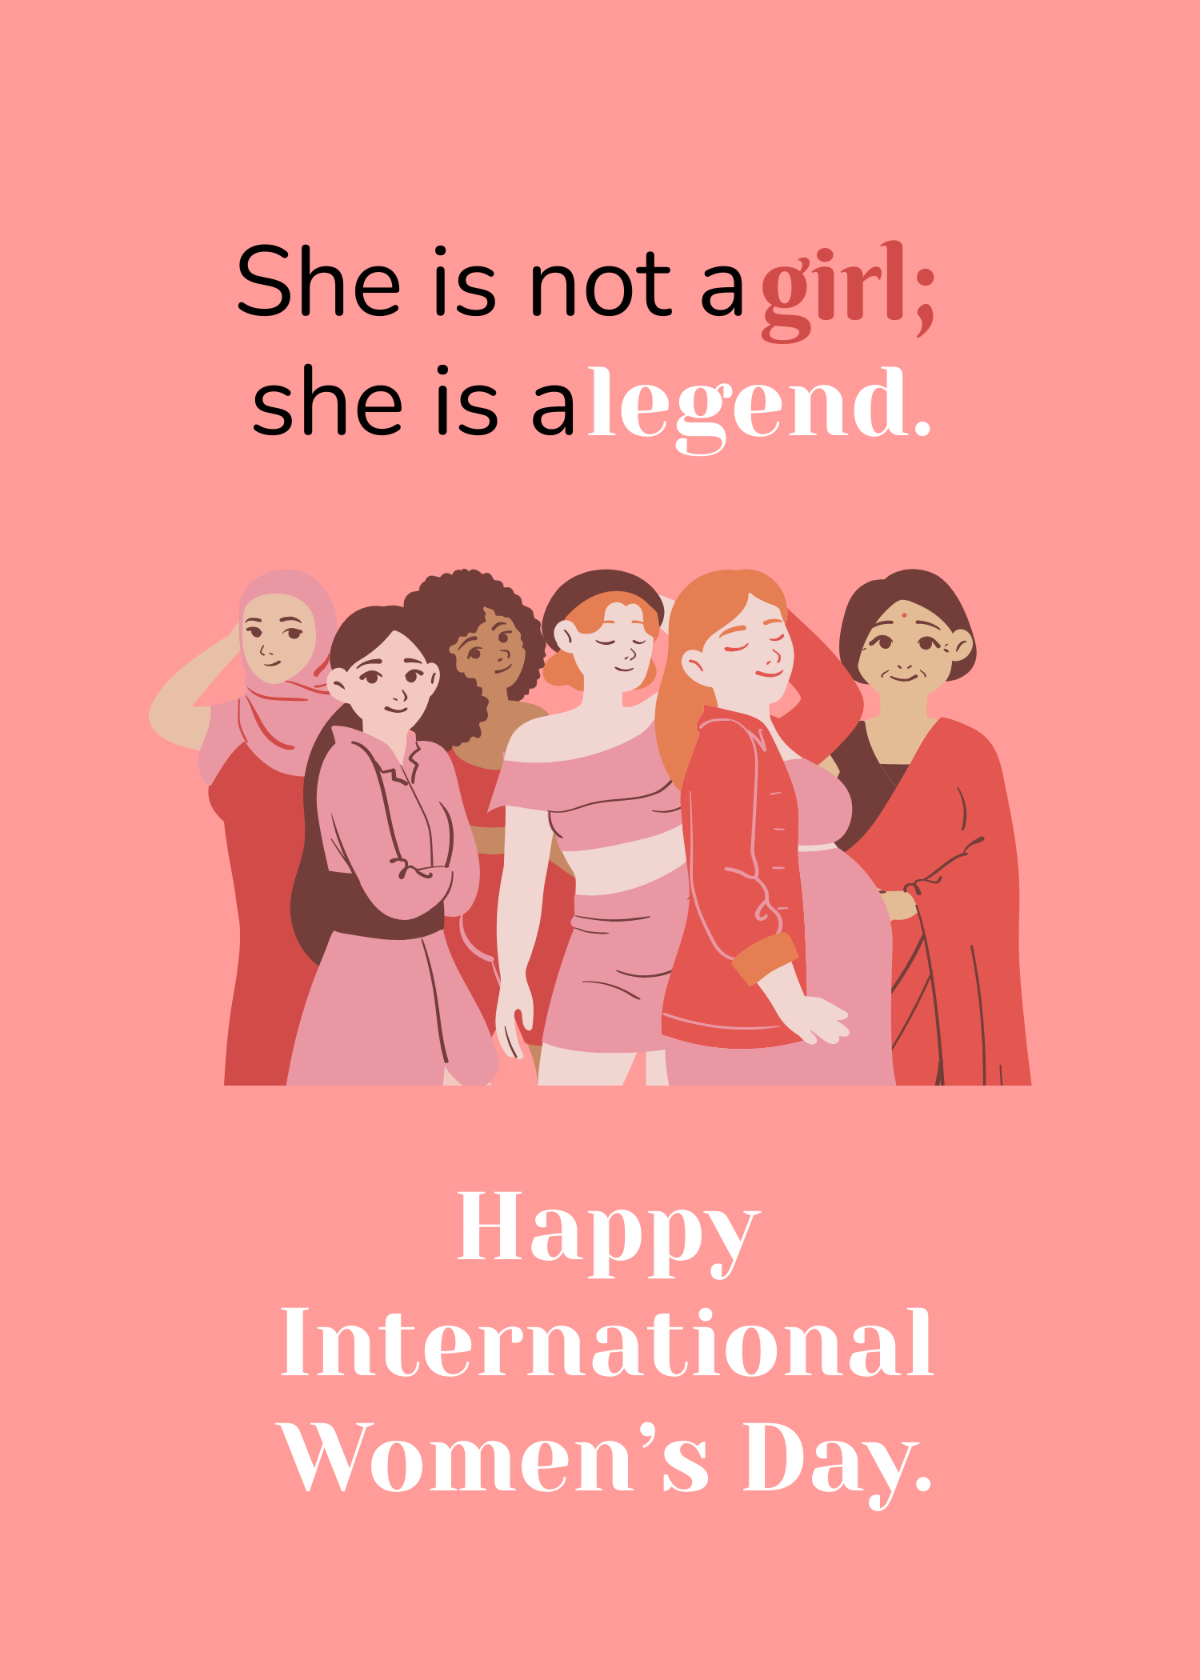 International Women's Day Greetings Template